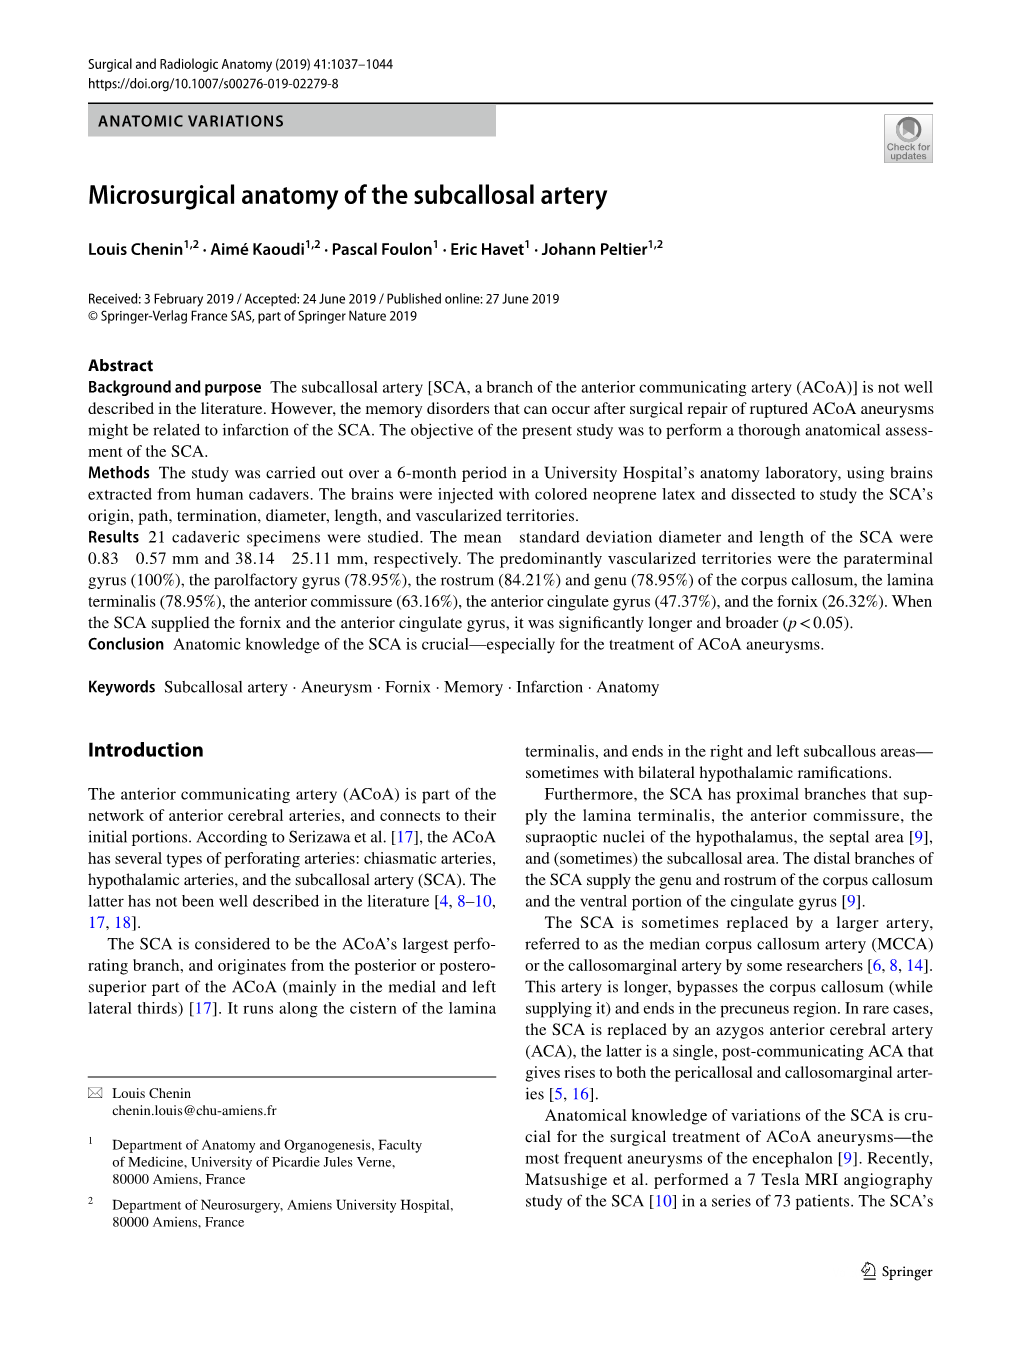 Microsurgical Anatomy of the Subcallosal Artery